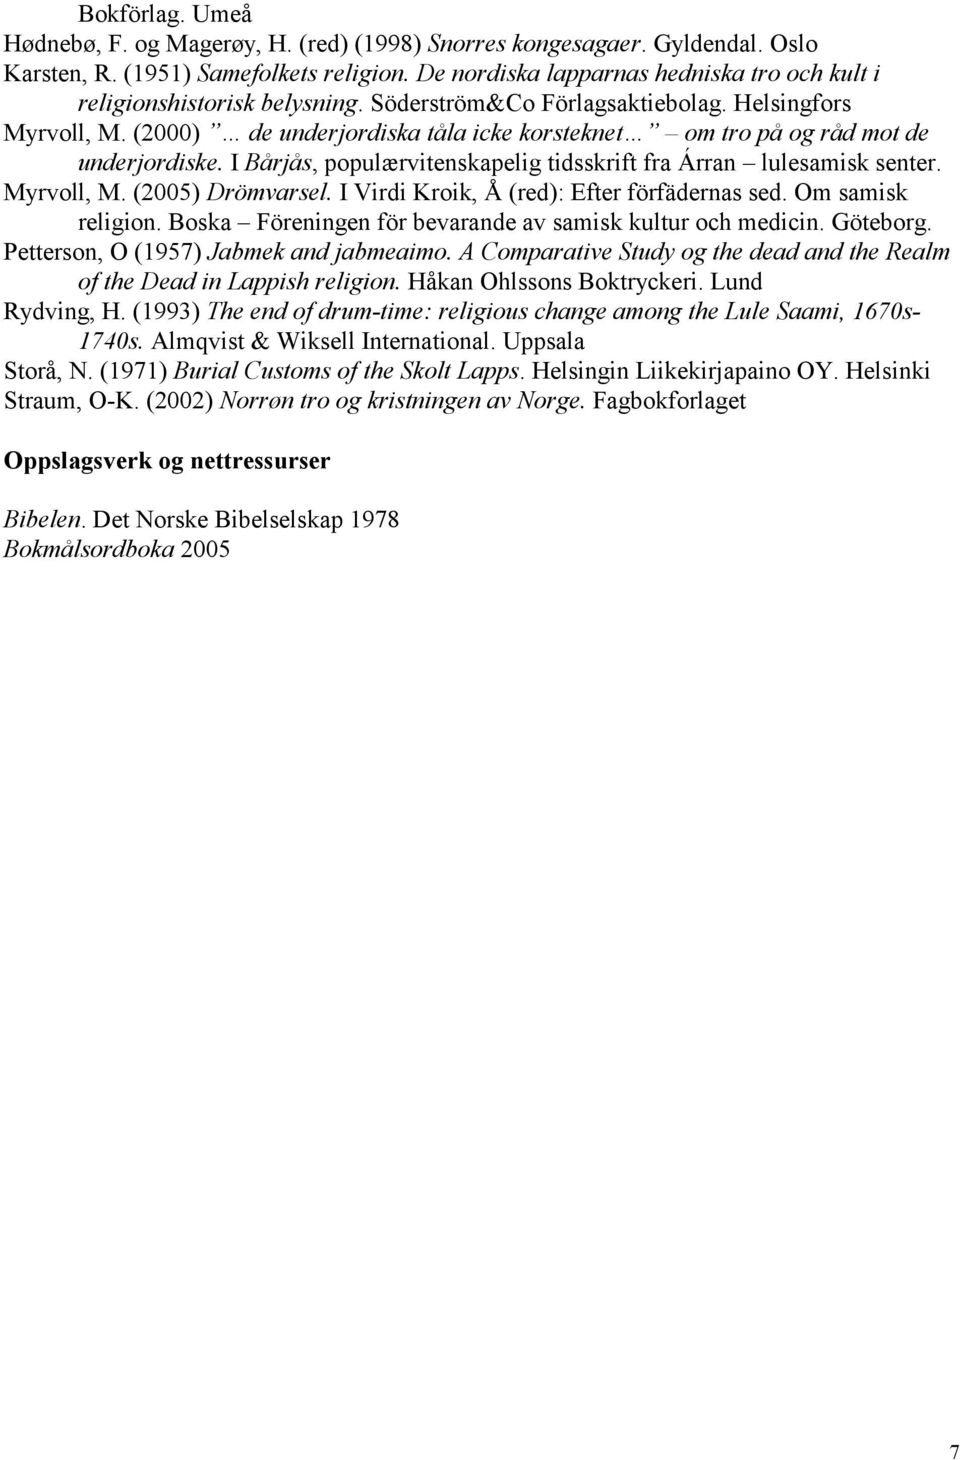 (2000) de underjordiska tåla icke korsteknet om tro på og råd mot de underjordiske. I Bårjås, populærvitenskapelig tidsskrift fra Árran lulesamisk senter. Myrvoll, M. (2005) Drömvarsel.